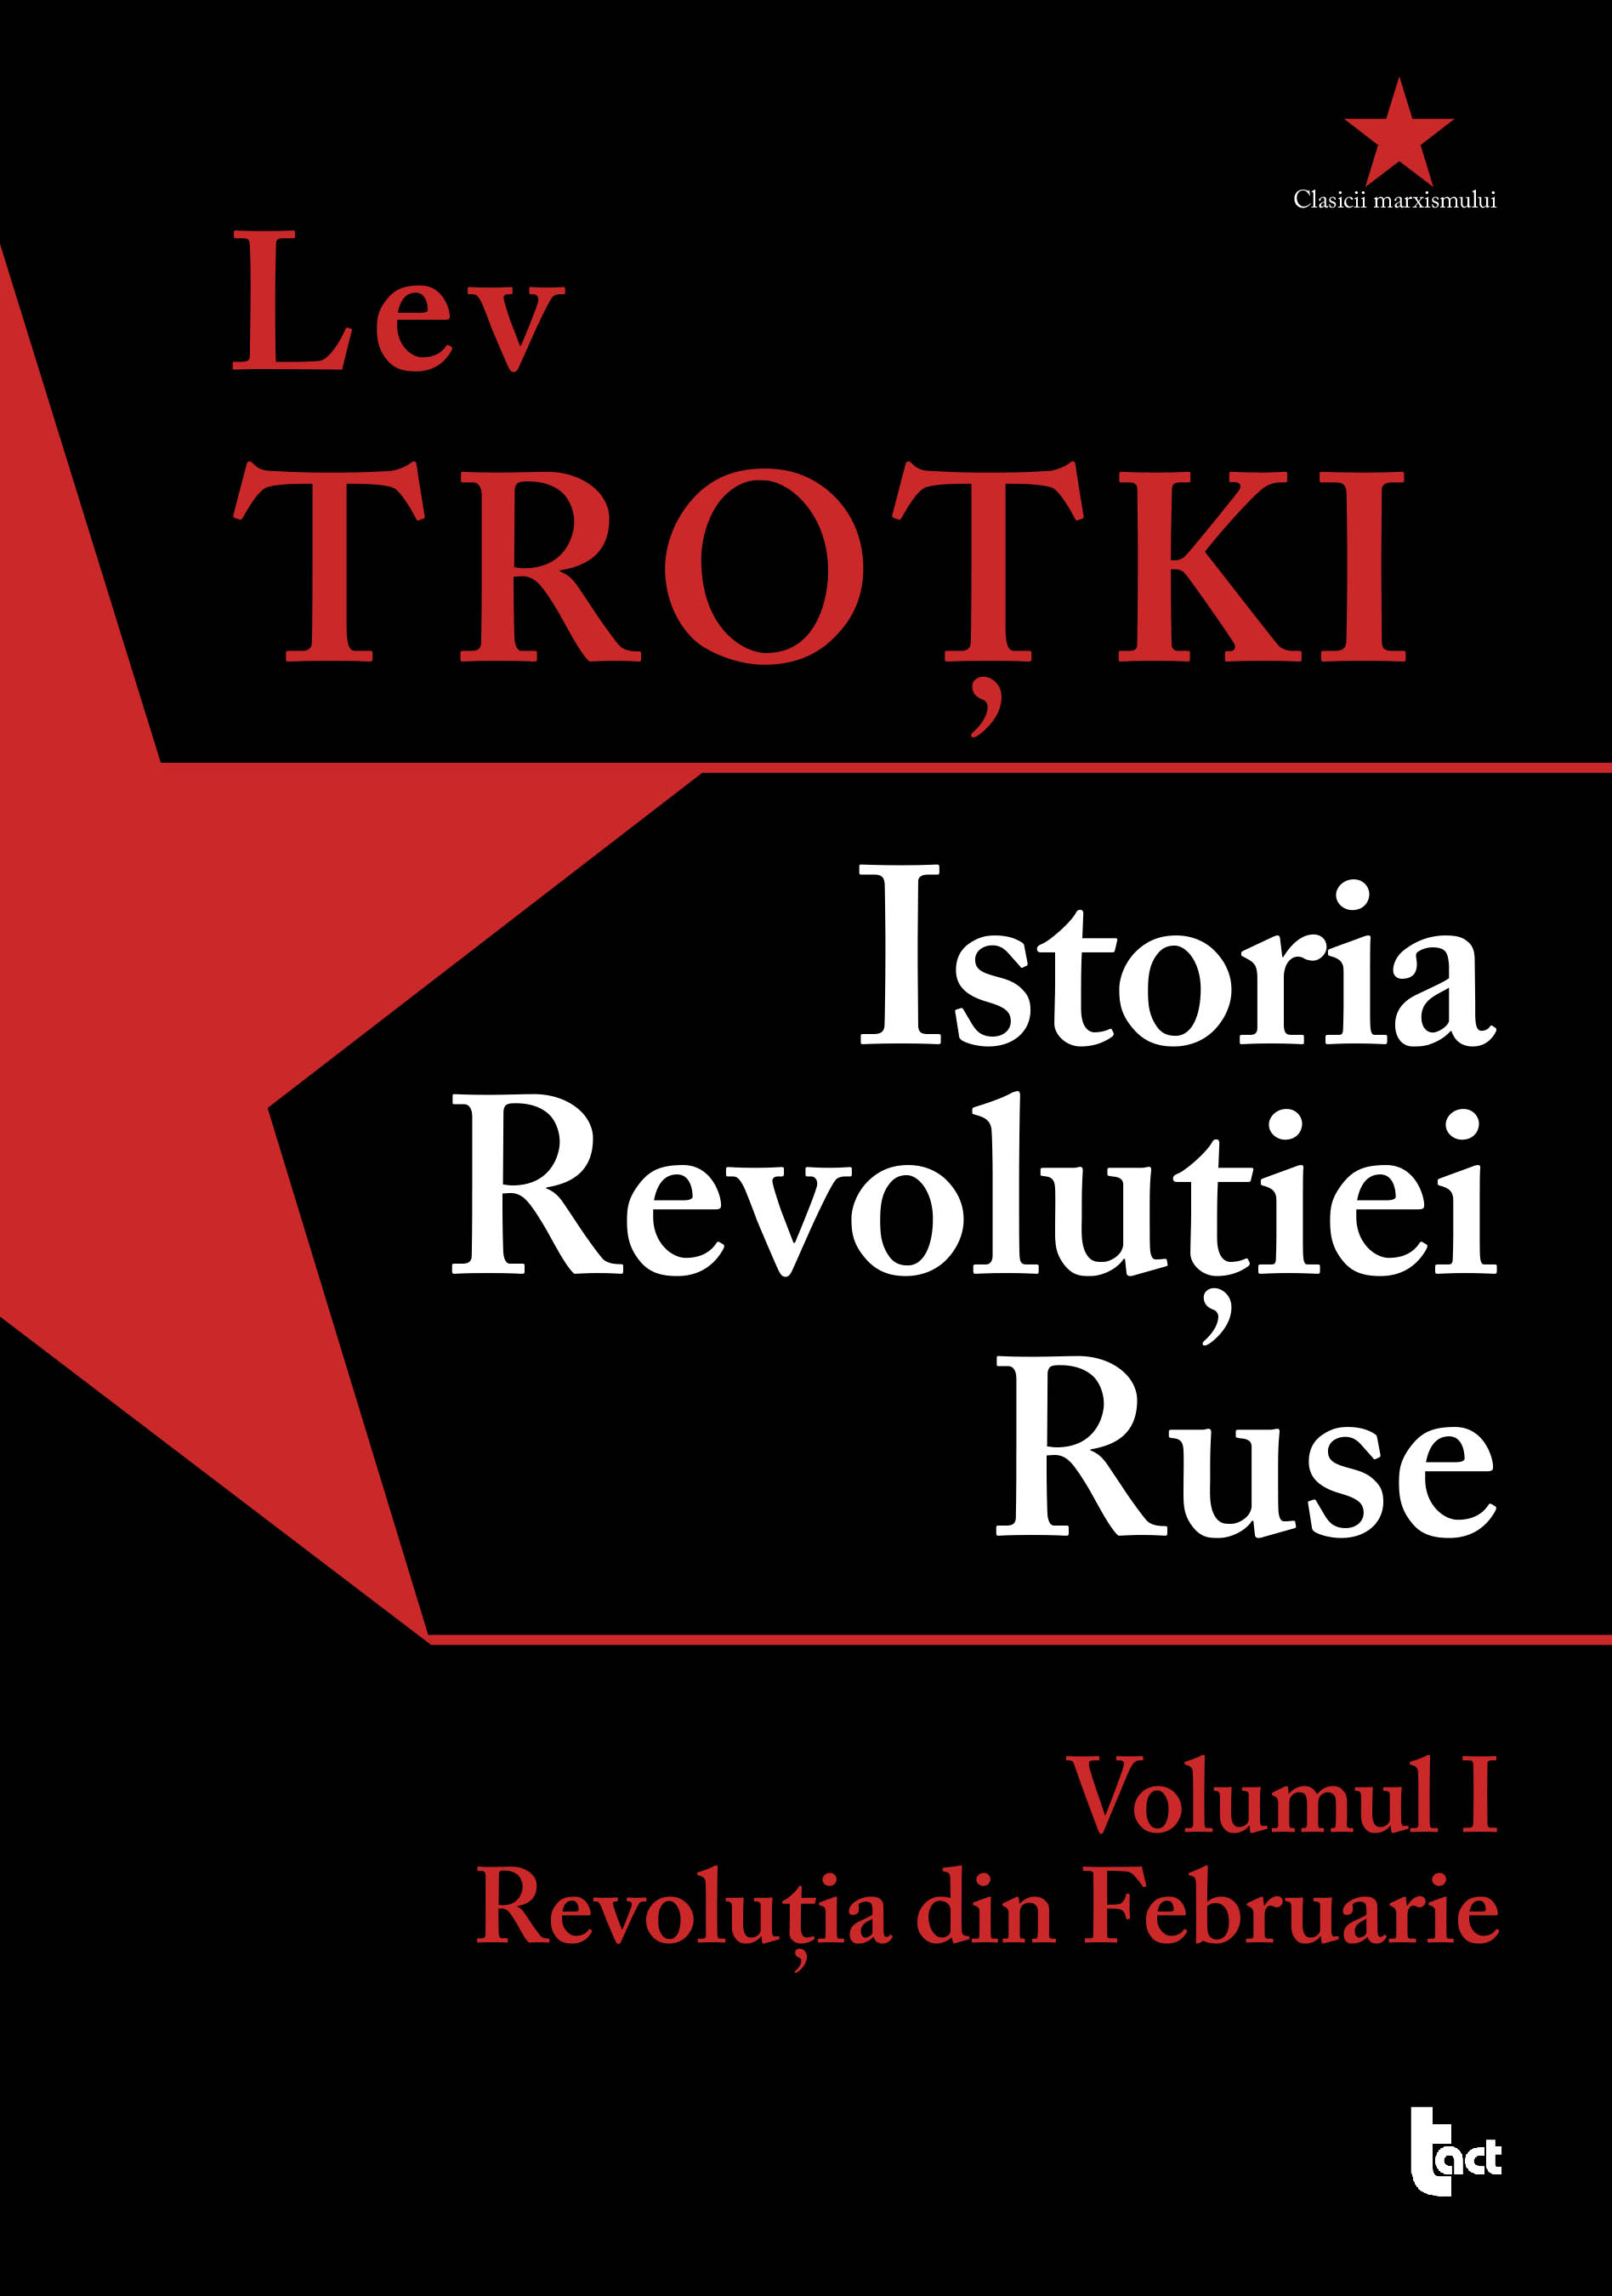 Istoria Revoluției Ruse. Volumul 1 | Lev Trotki carturesti.ro Carte